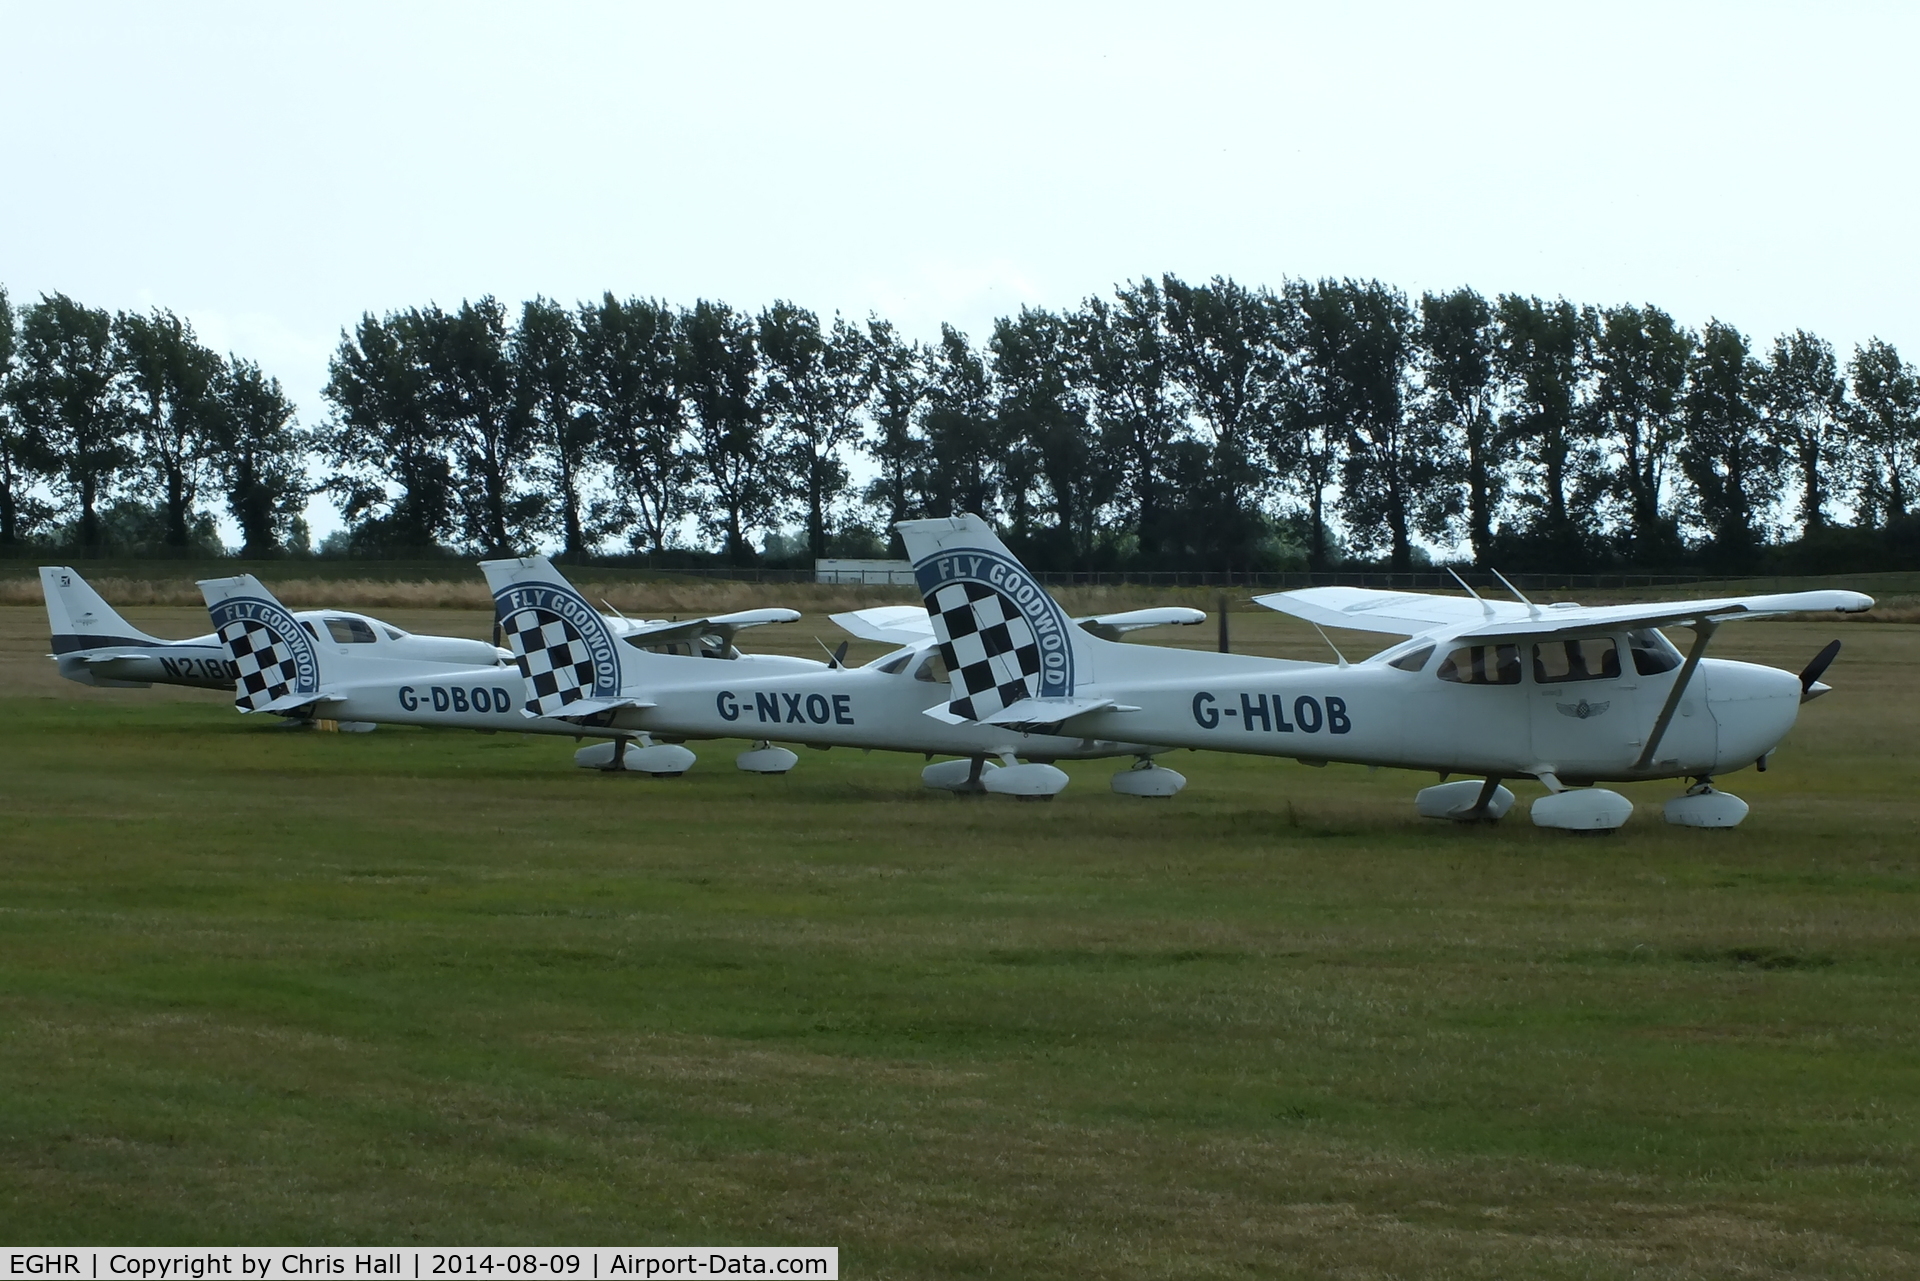 Goodwood Airfield Airport, Chichester, England United Kingdom (EGHR) - Goodwood Aero Club